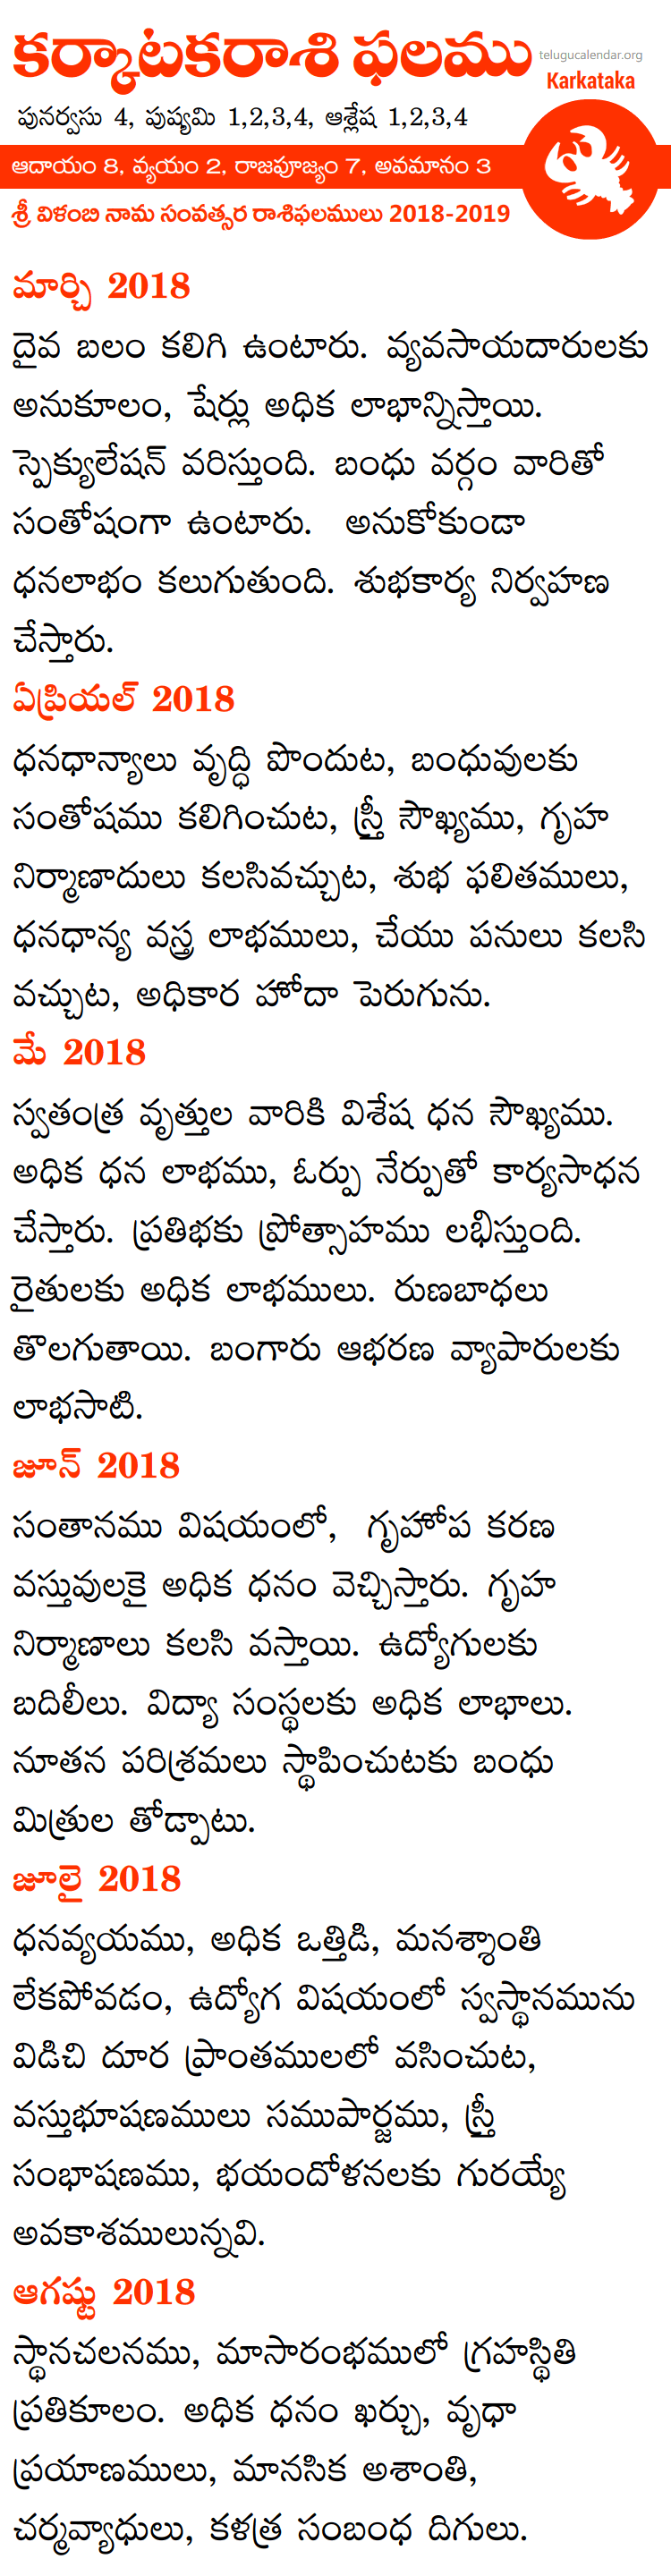 Karkataka Rasi Phalalu 2018-2019 Telugu